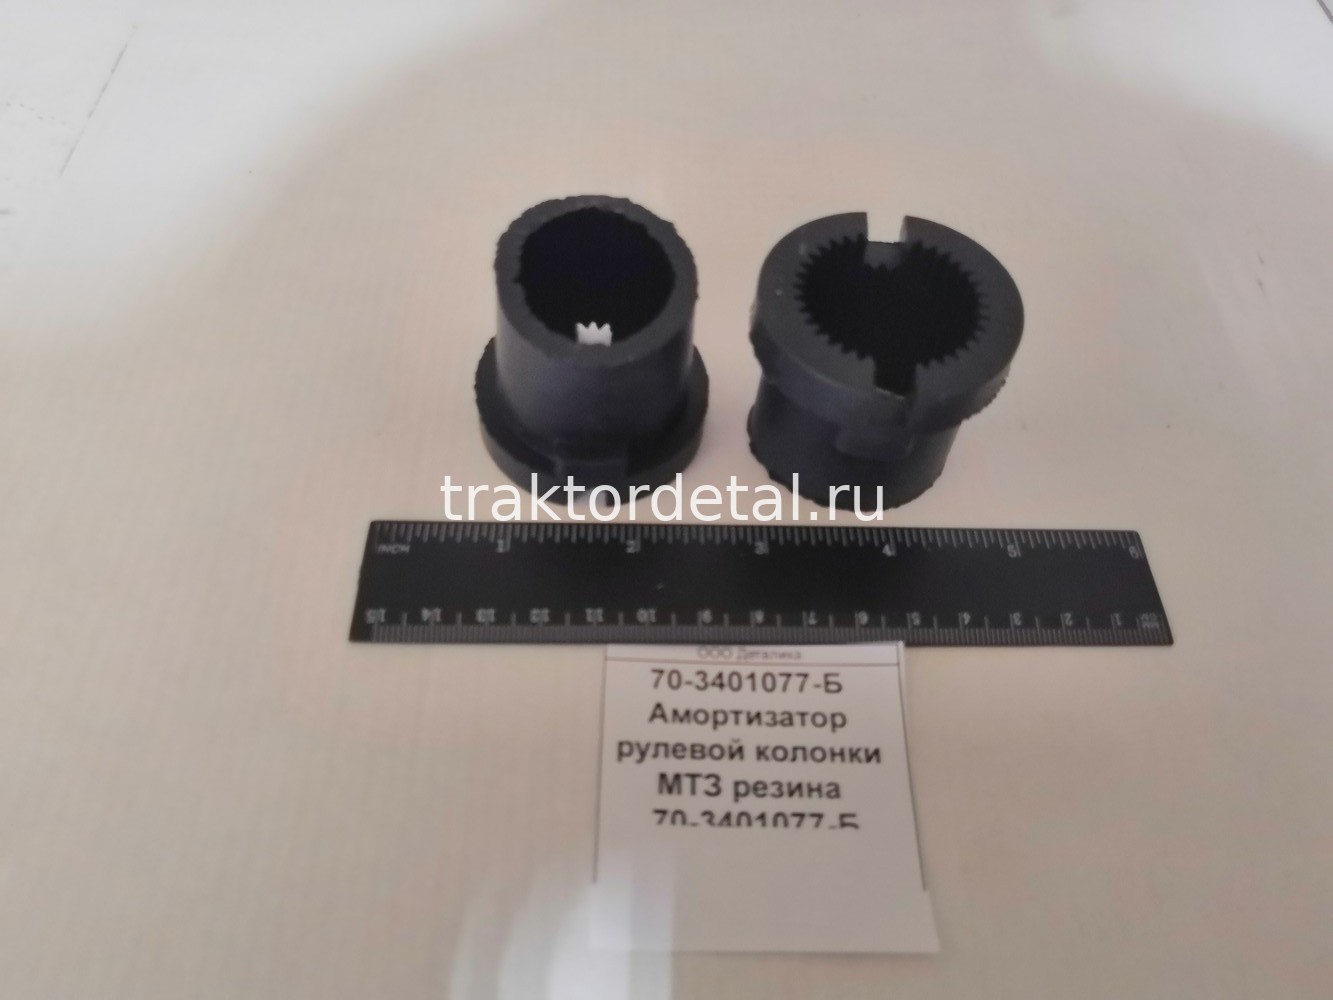 Амортизатор рулевой колонки МТЗ резина 70-3401077-Б